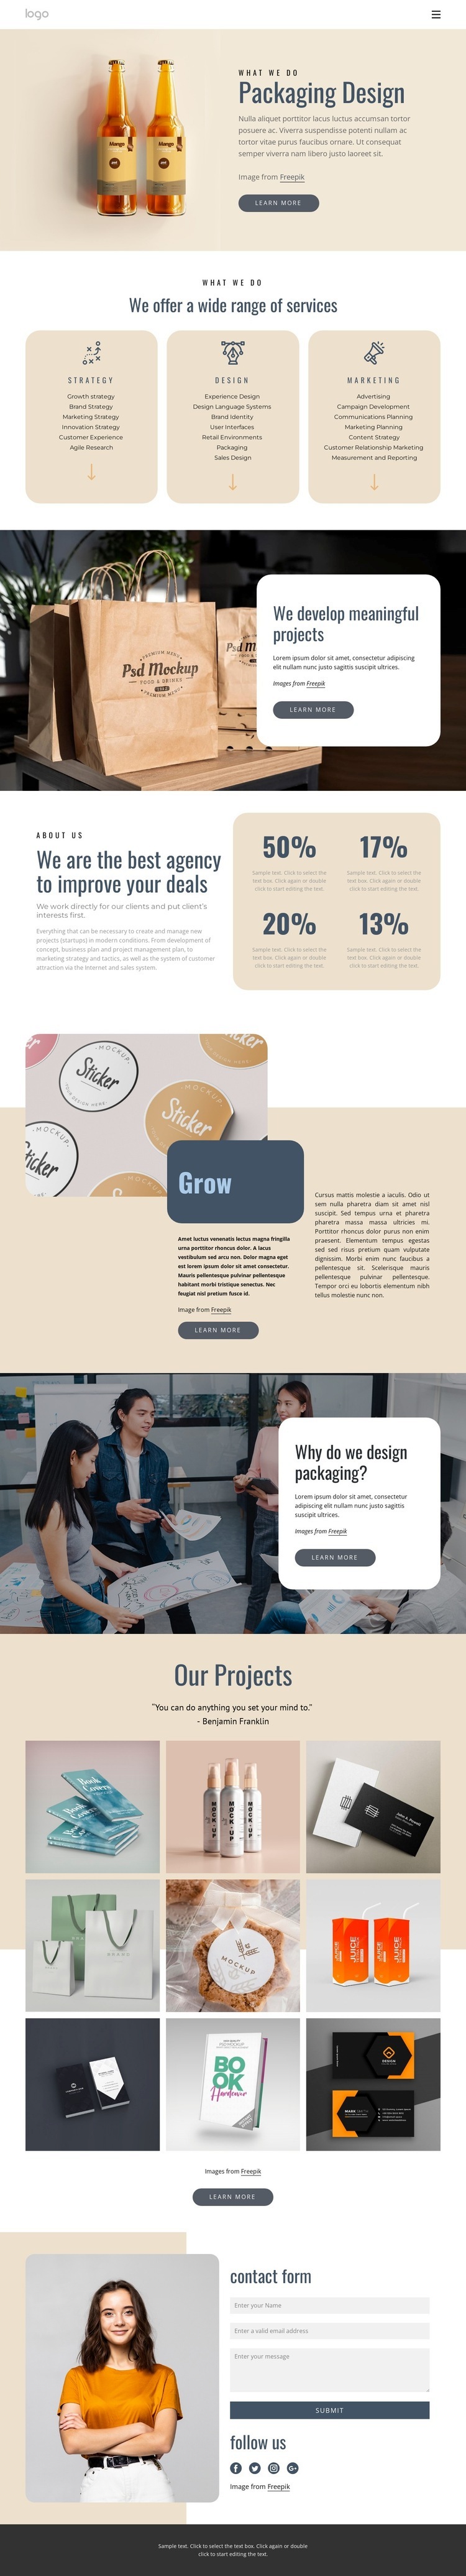 Branding and packaging design Webflow Template Alternative